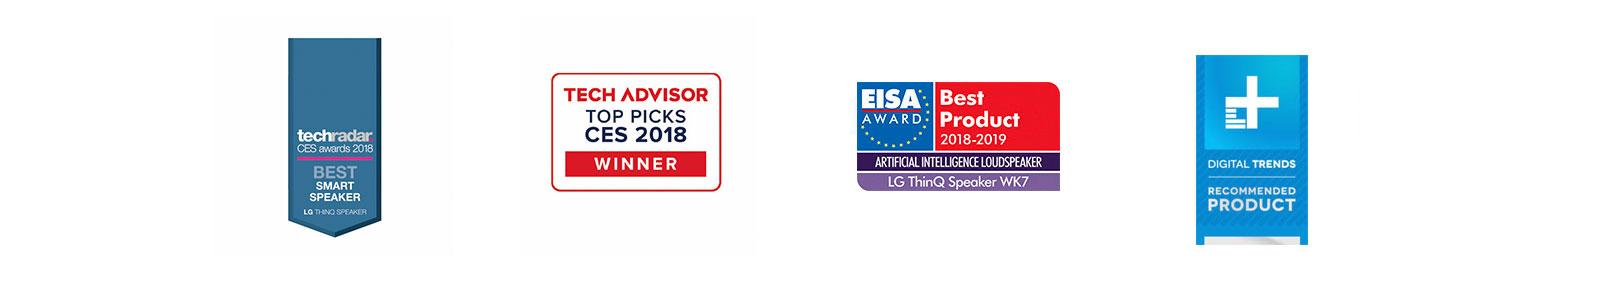 4 Award logos - 1.TechRadar CES Award 2018 logo, 2. Tech Advisor top pics CES 2018 winner logo, 3. EISA Award Best Product 2018-2019 logo, 4. Digital Trends recommended product logo